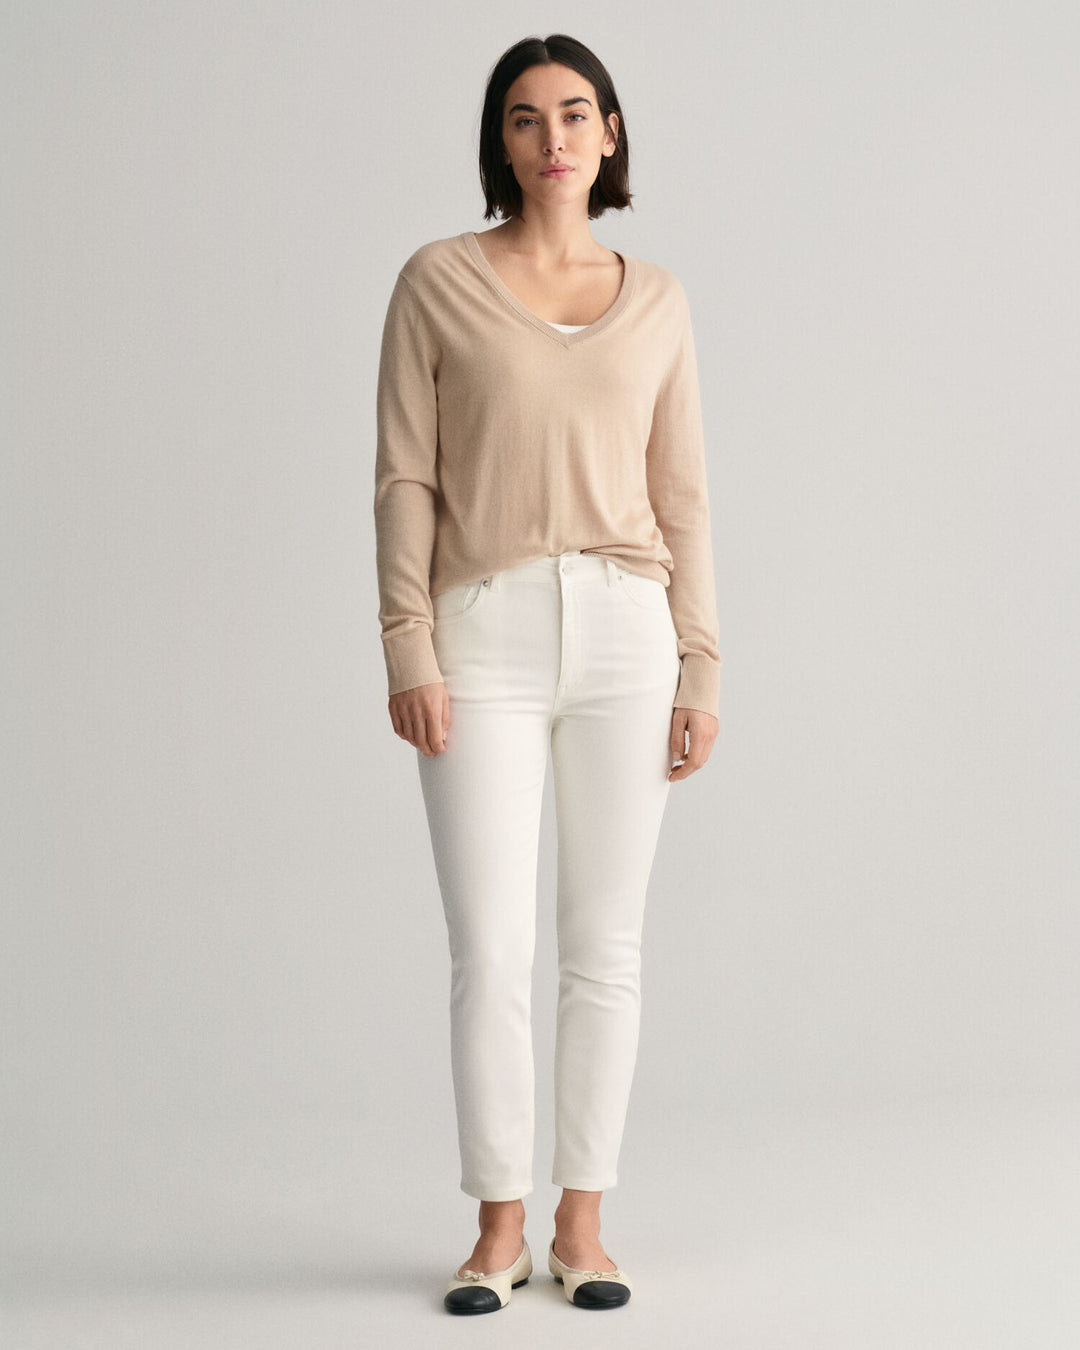 GANT Slim Cropped White Jeans/Traperice 4100224